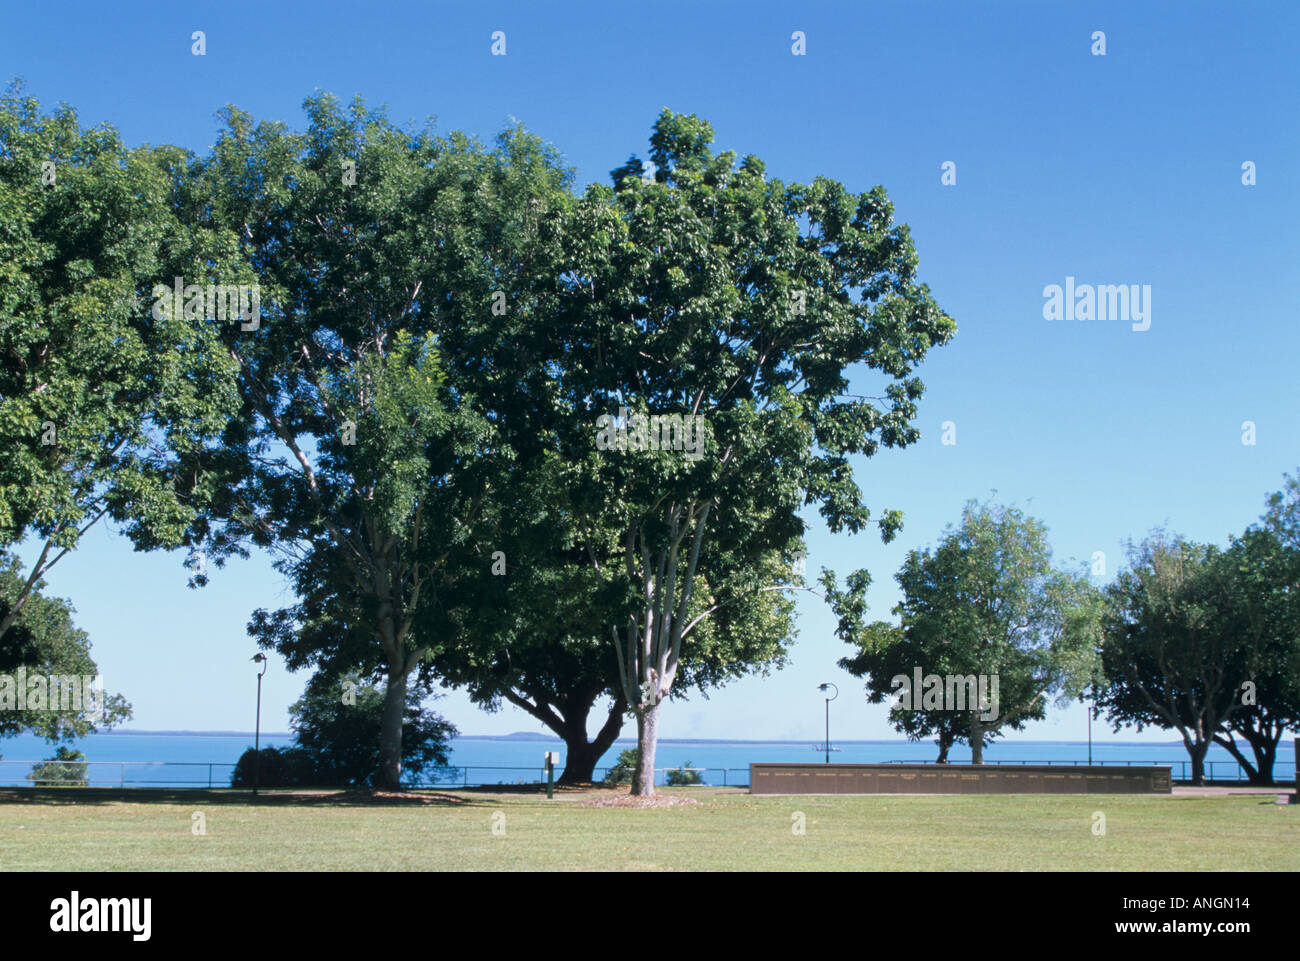 Bicentennial park, large trees and Second world war memorial, sea behind, Darwin esplanade, Northern Territory, Australia. Stock Photo